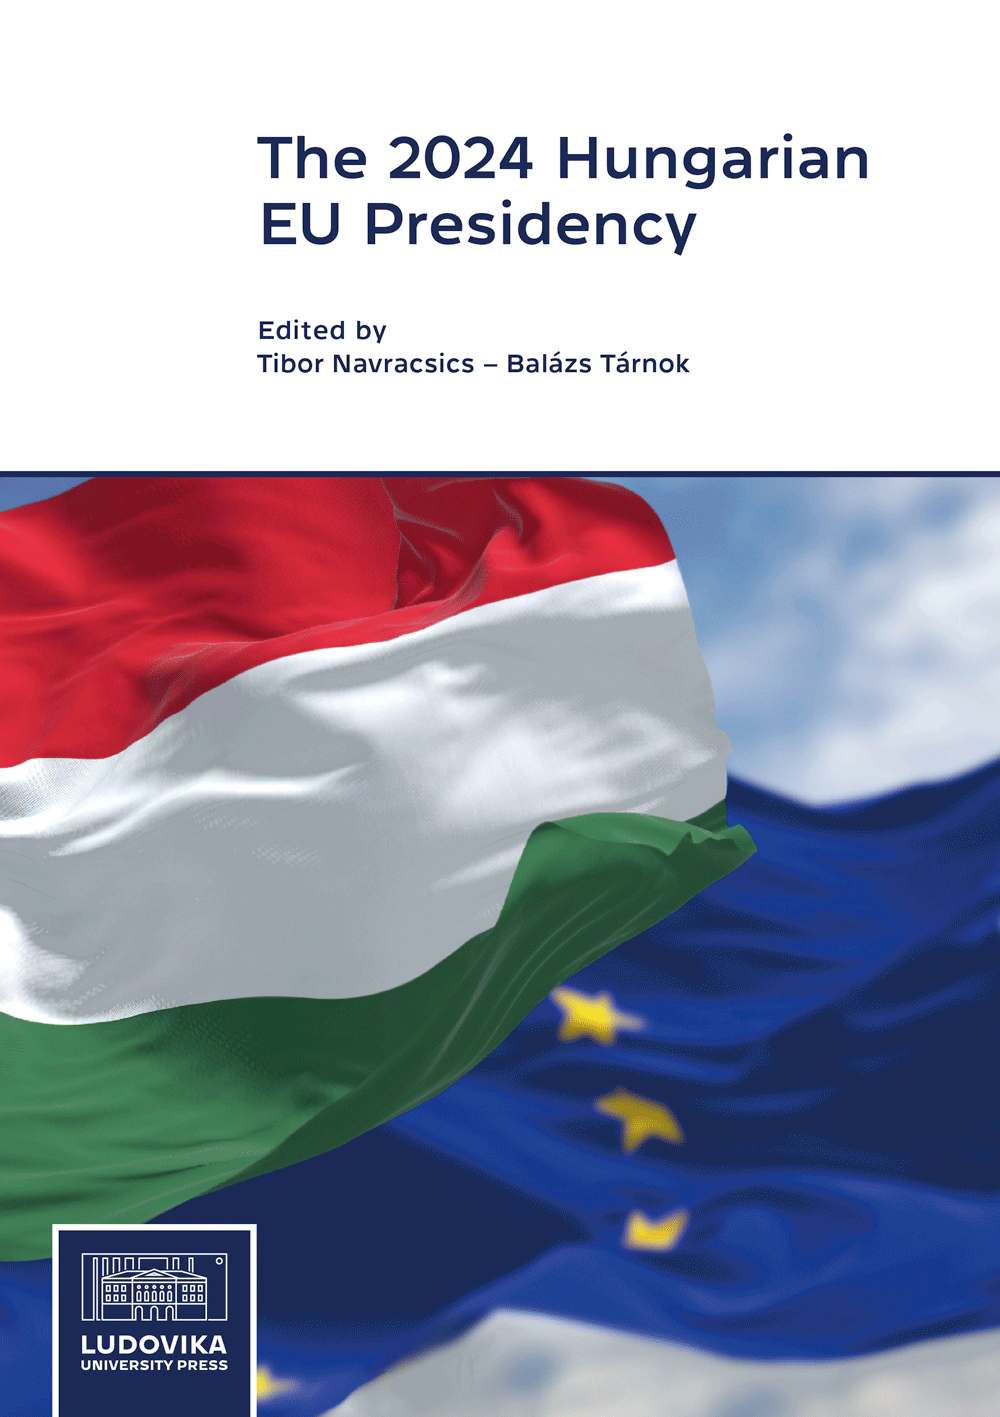 The 2024 Hungarian EU Presidency